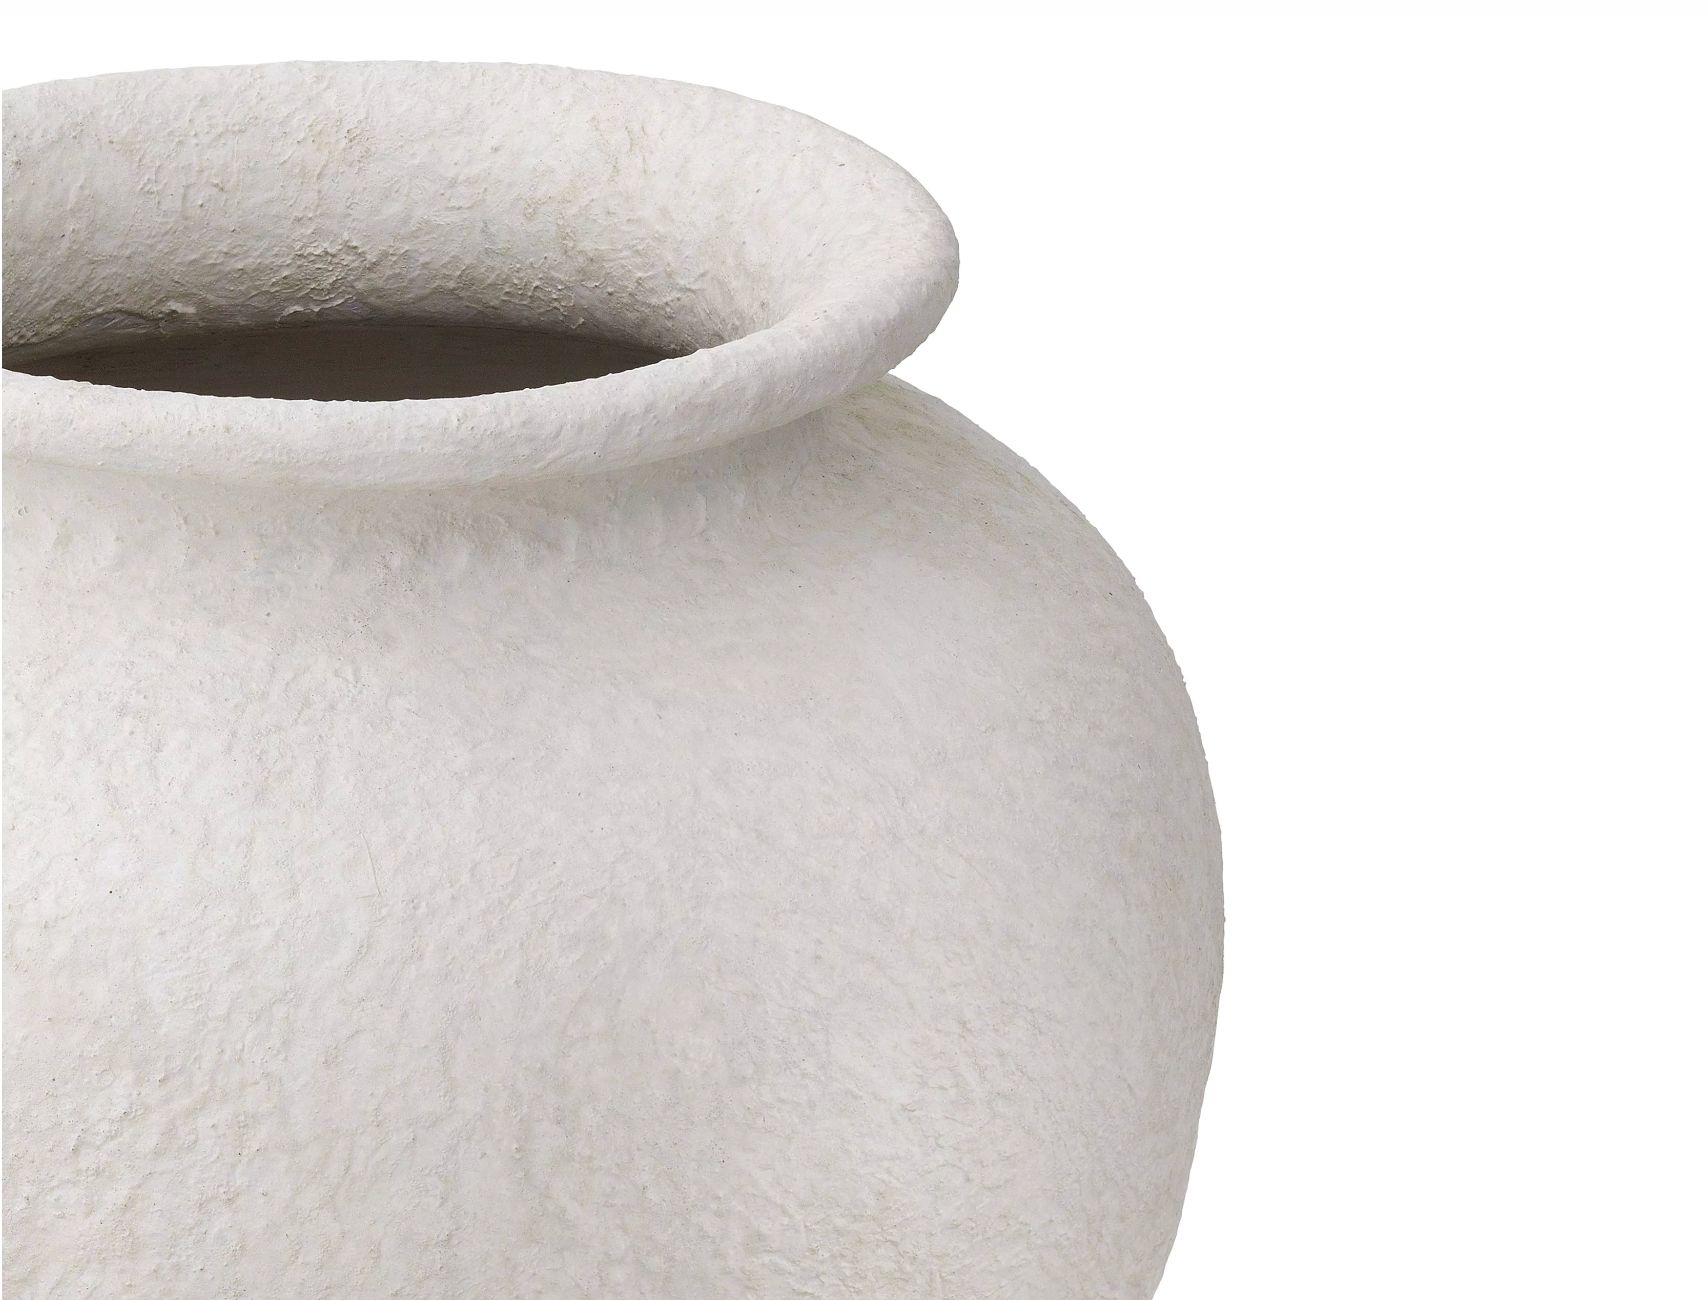 Clay Sculpture Vase